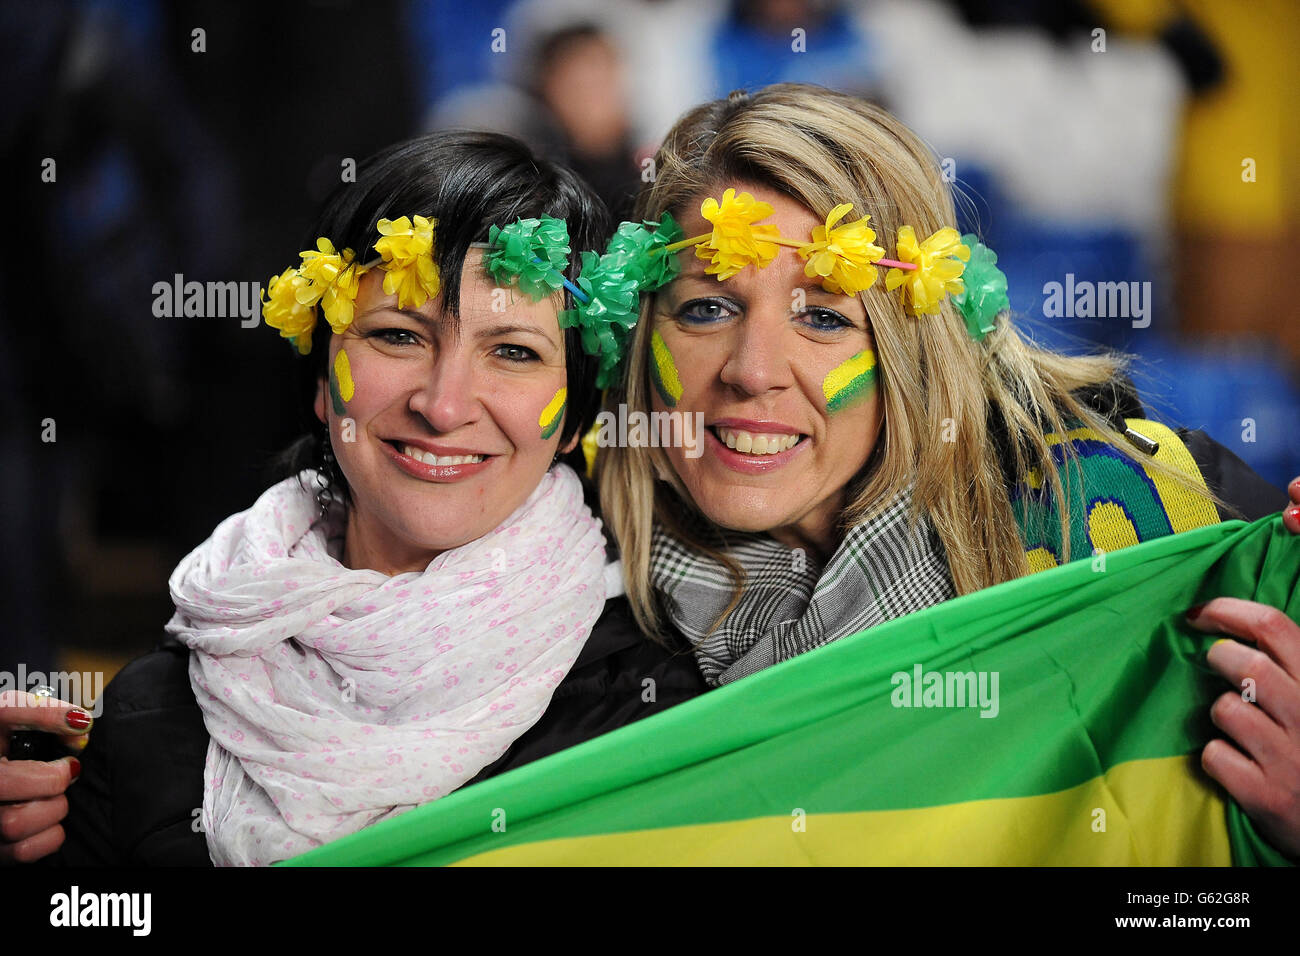 Soccer - International Friendly - Brazil v Russia - Stamford Bridge. Brazil fans in the stands before kick-off Stock Photo